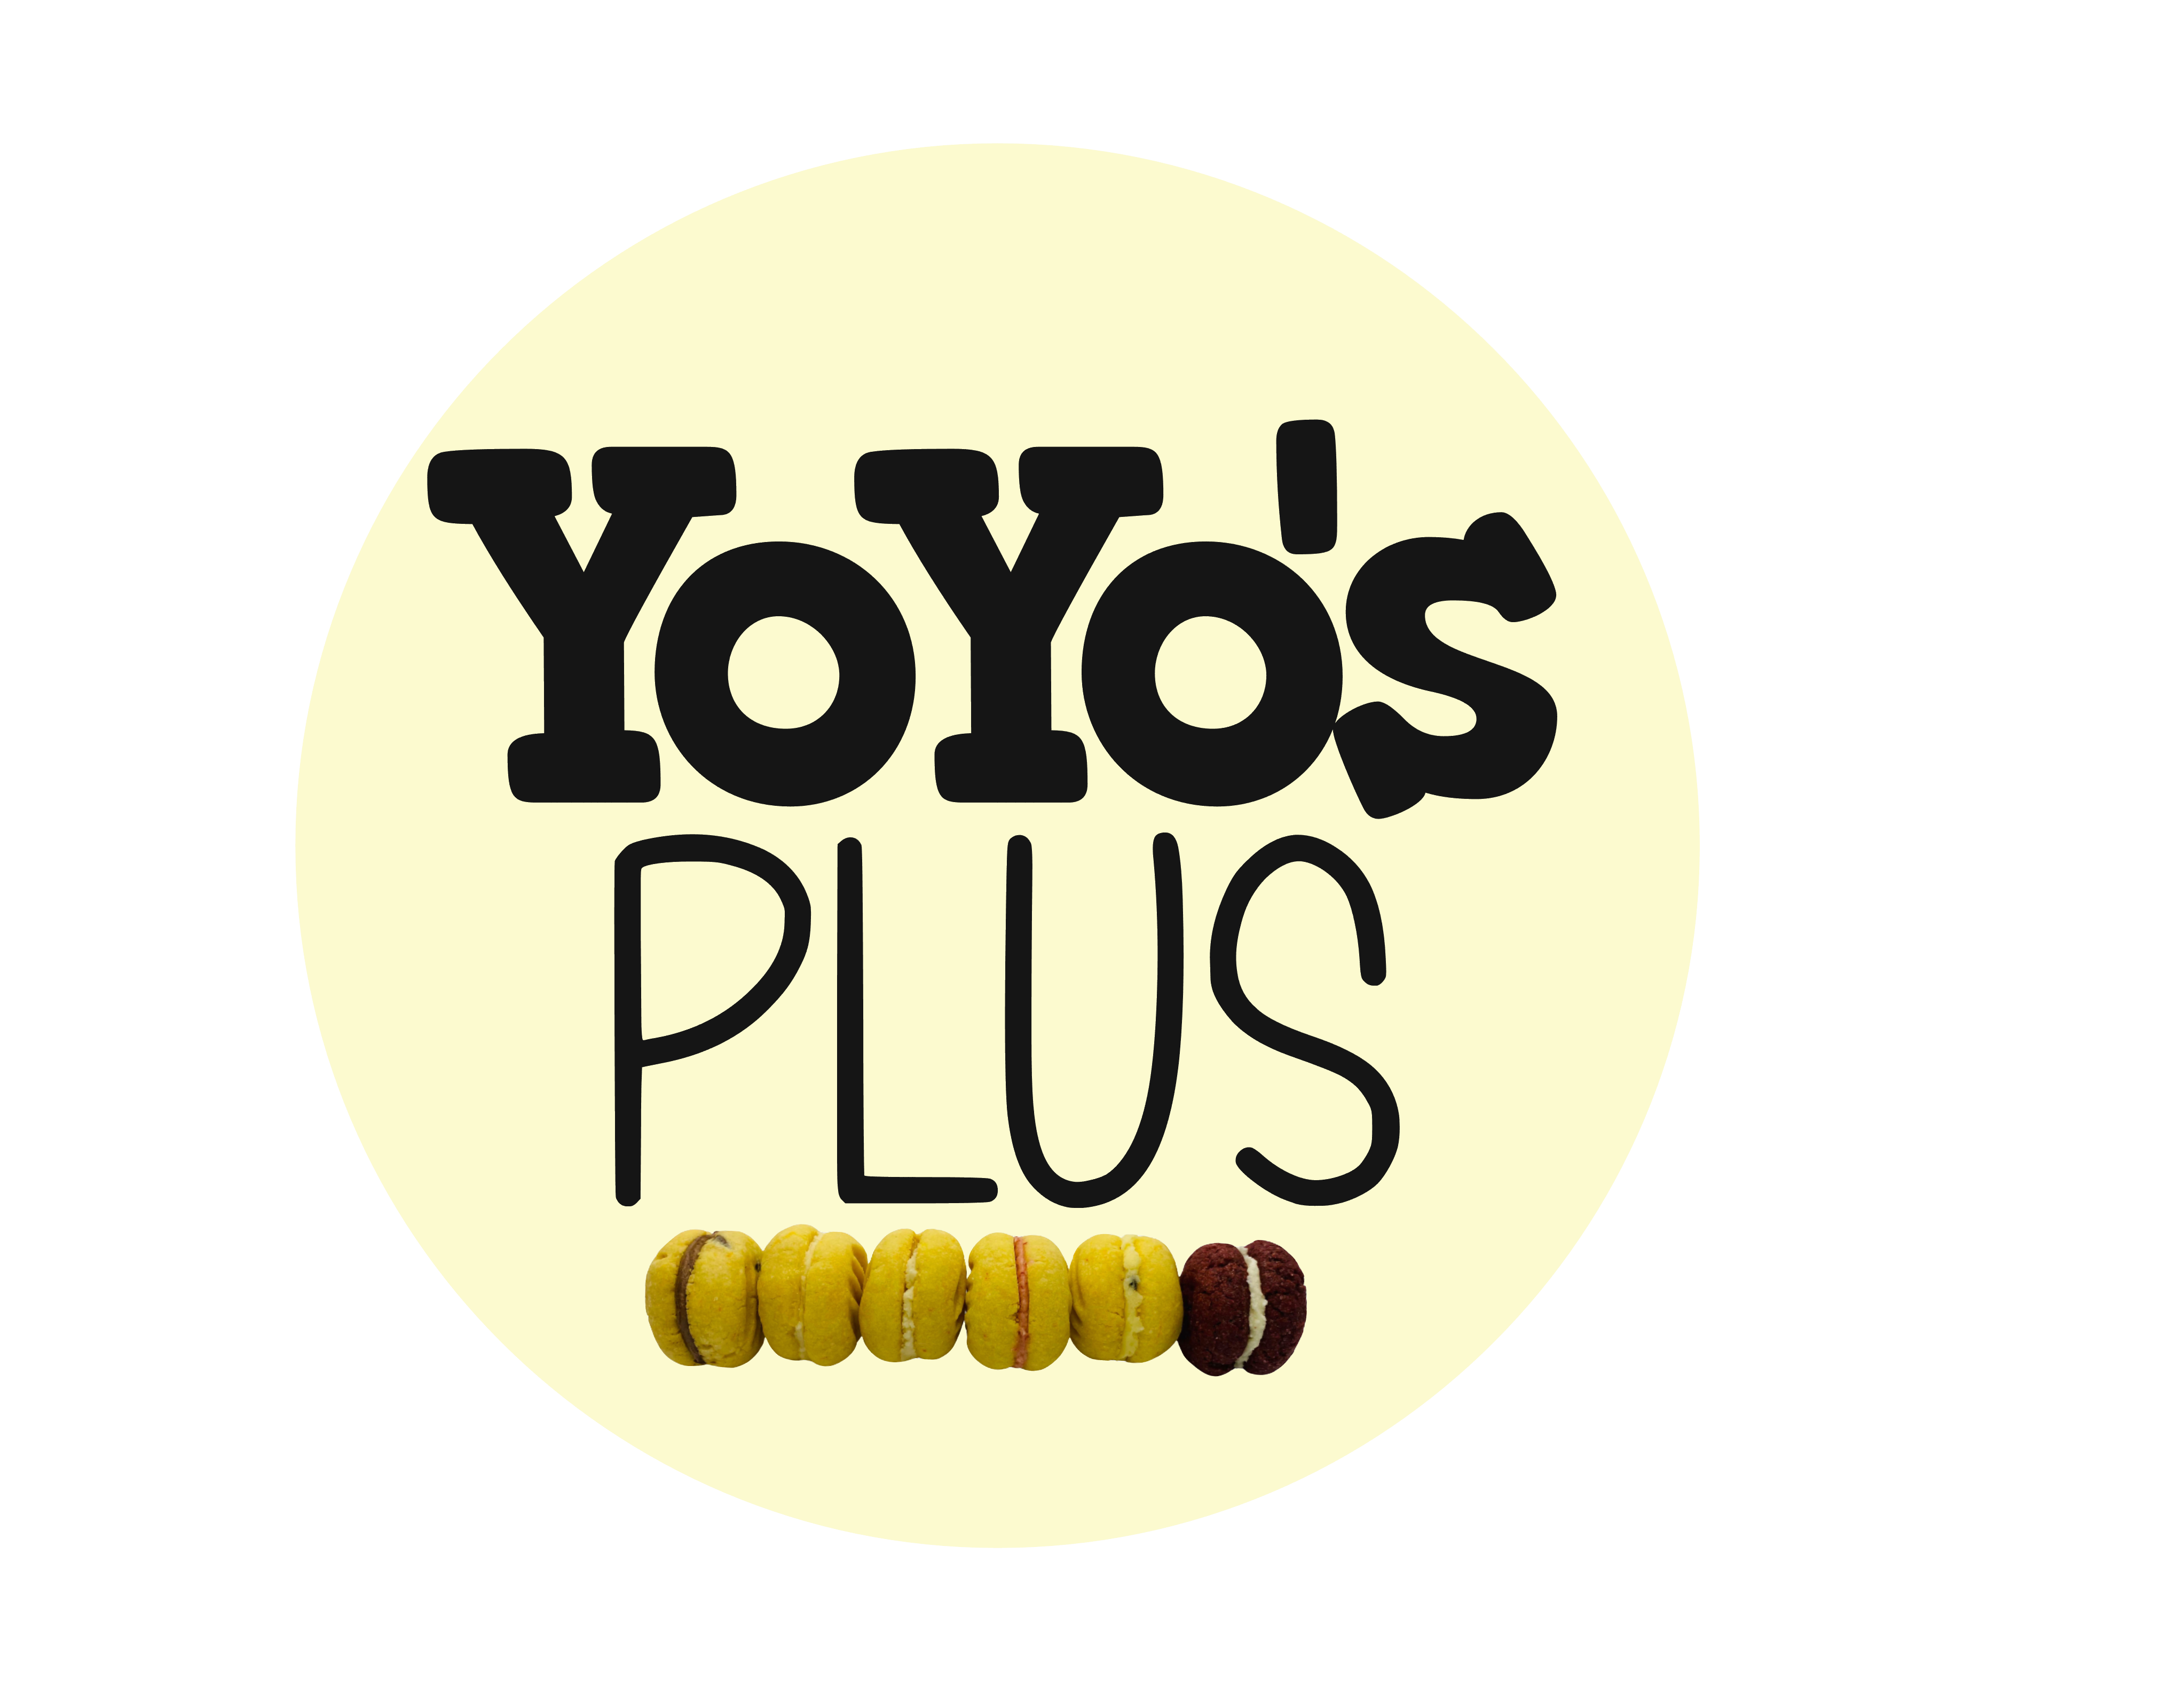 YoyosPlus